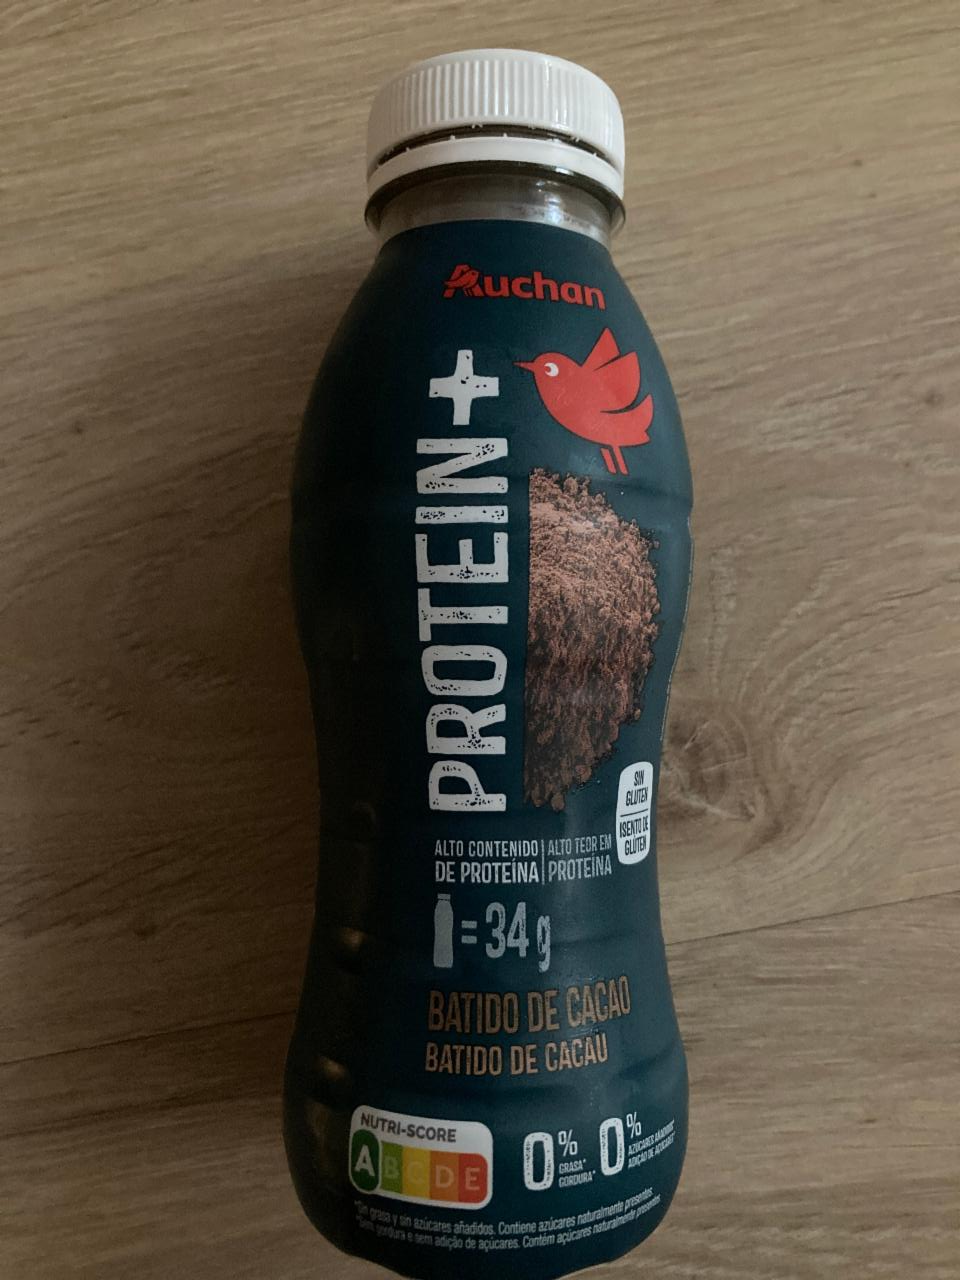 Fotografie - Protein+ Batido de cacao Auchan